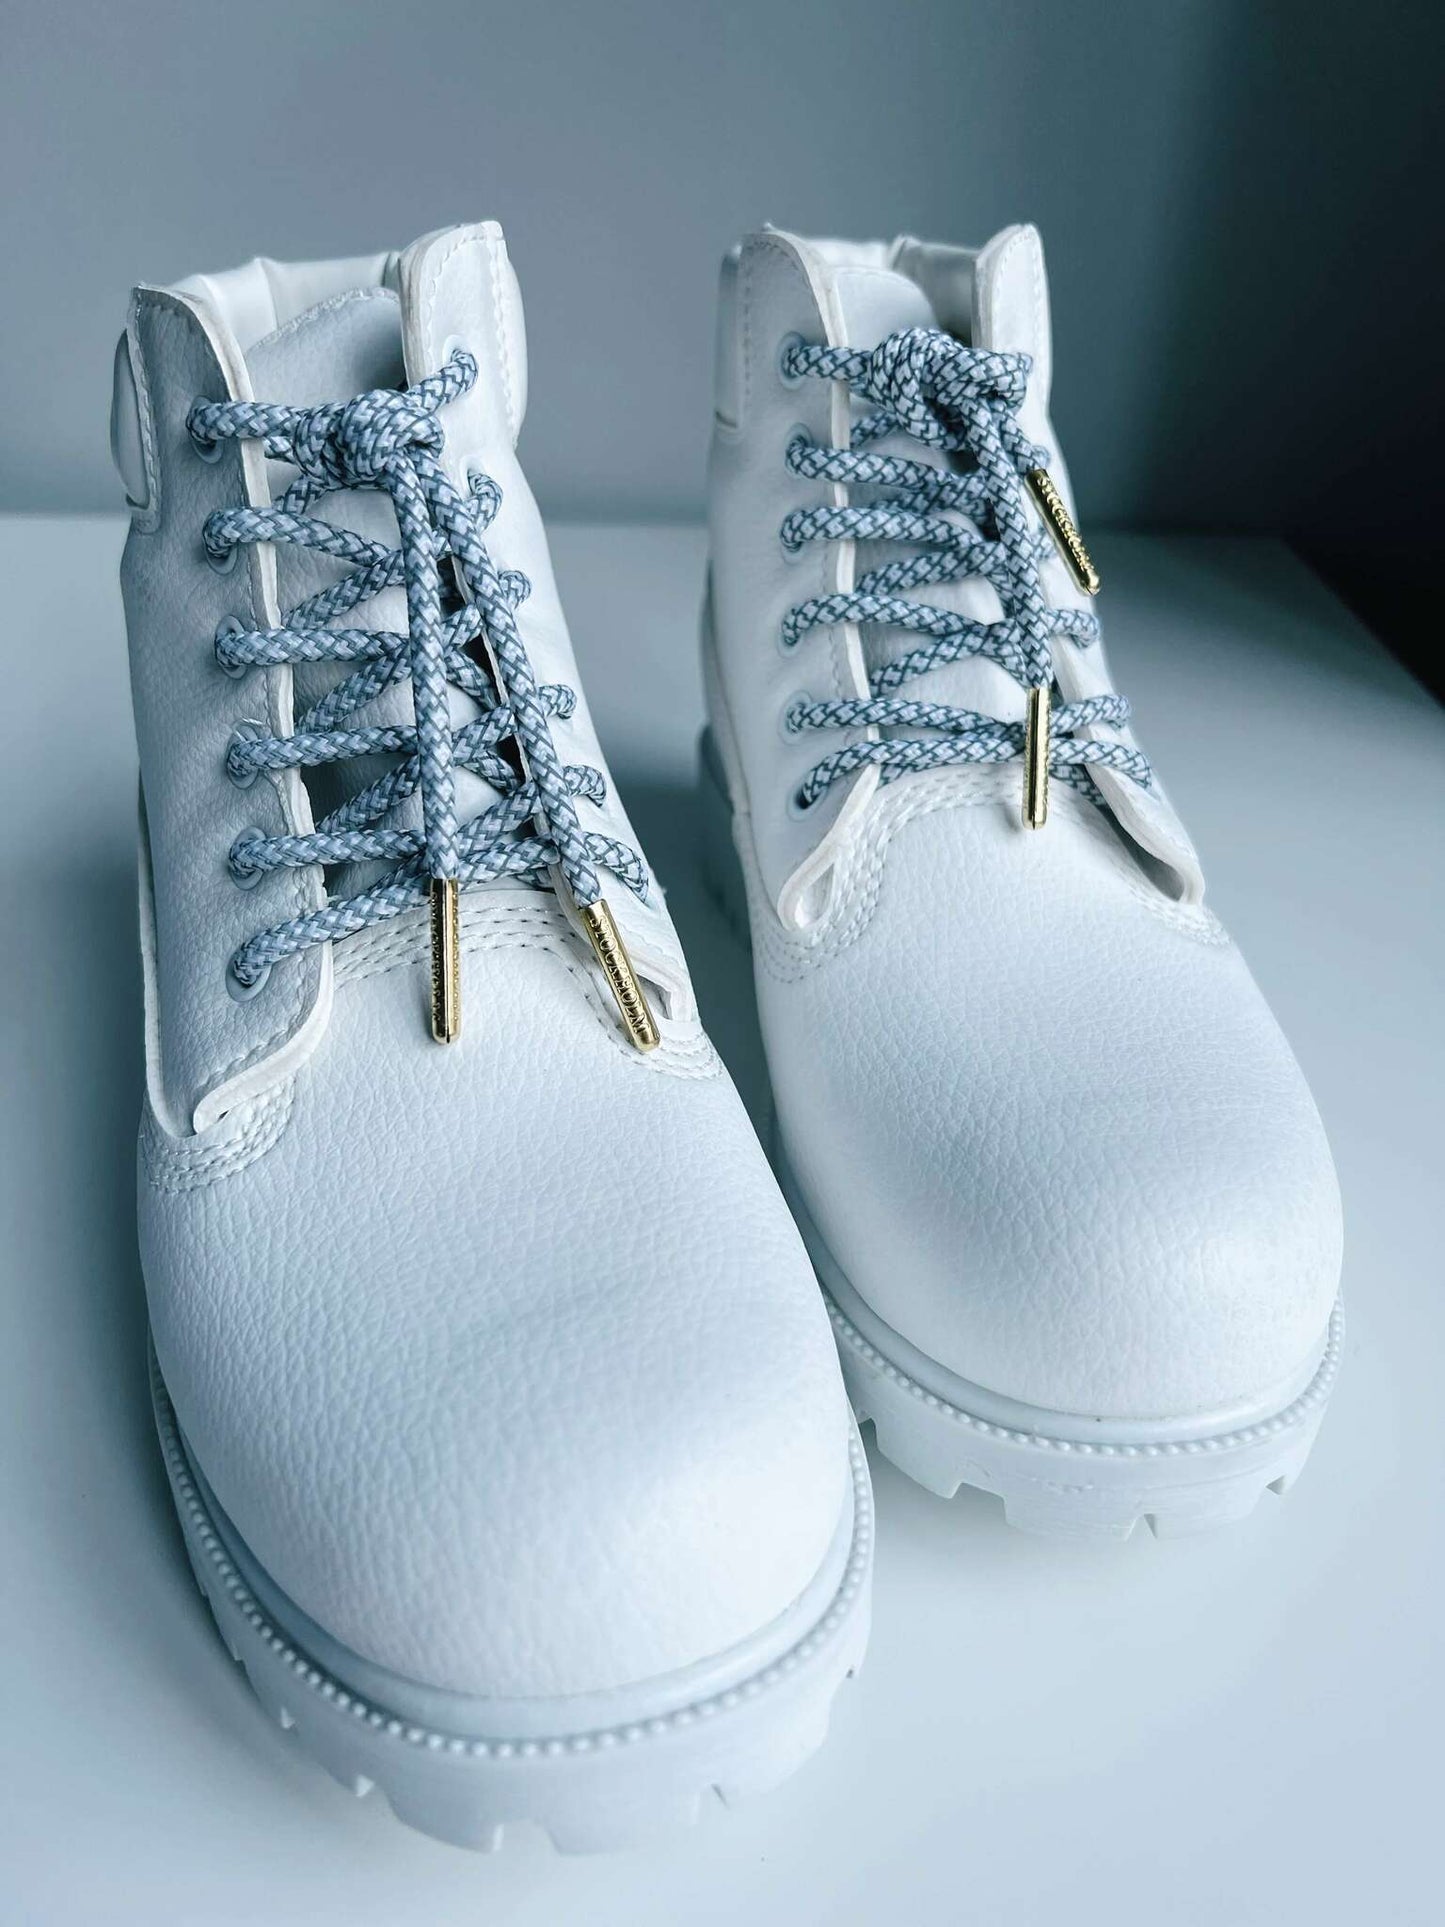 White Reflective shoelaces - The Shoelace Brand